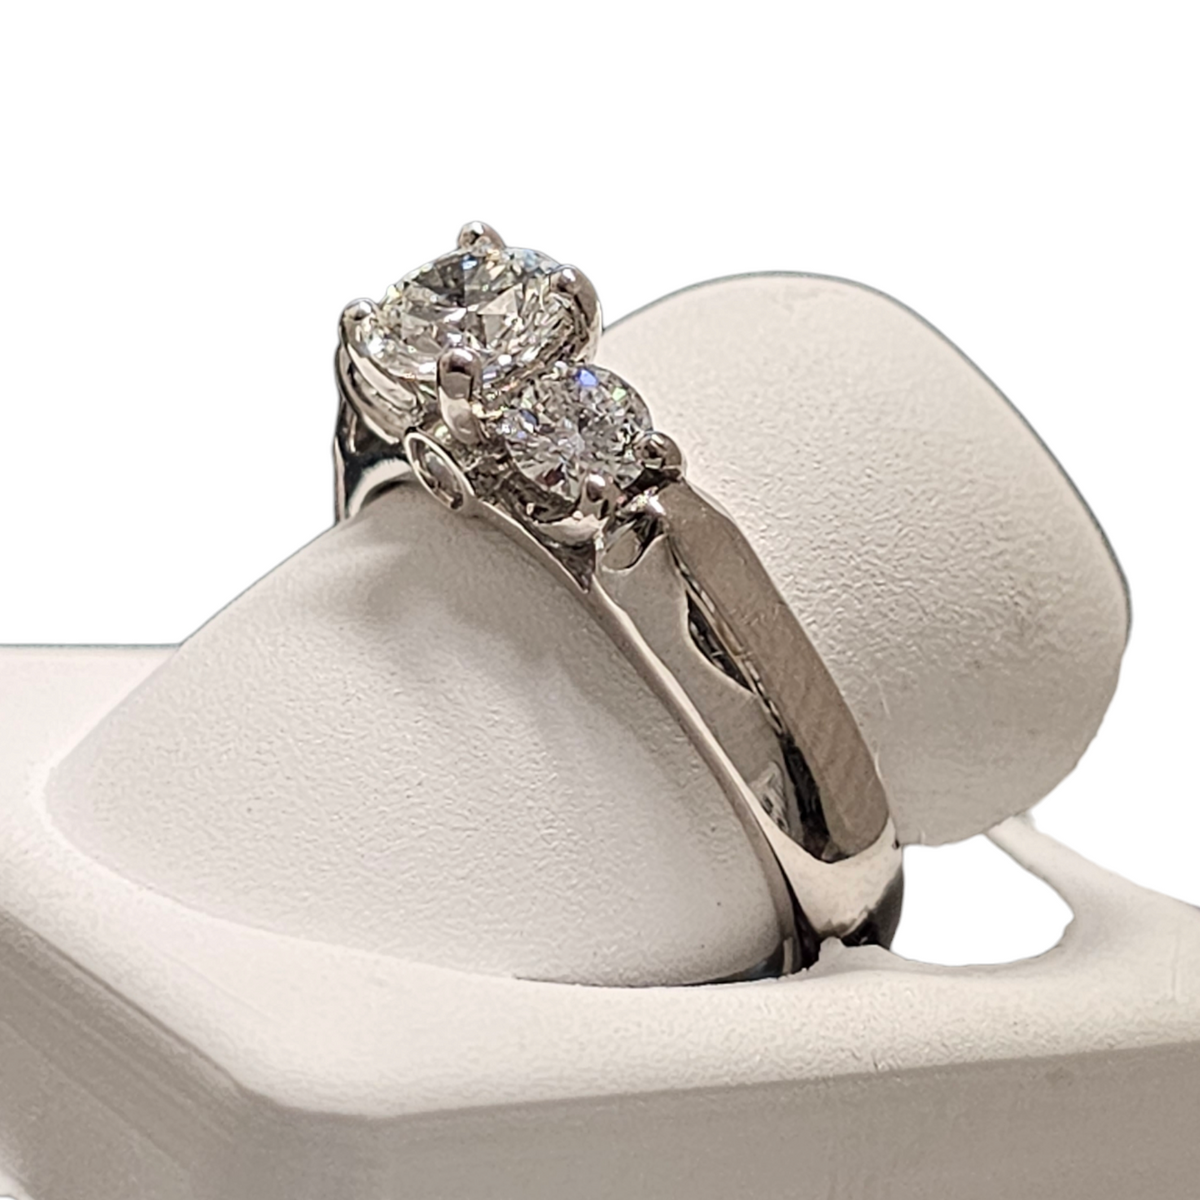 Palladium Diamond Engagement Ring